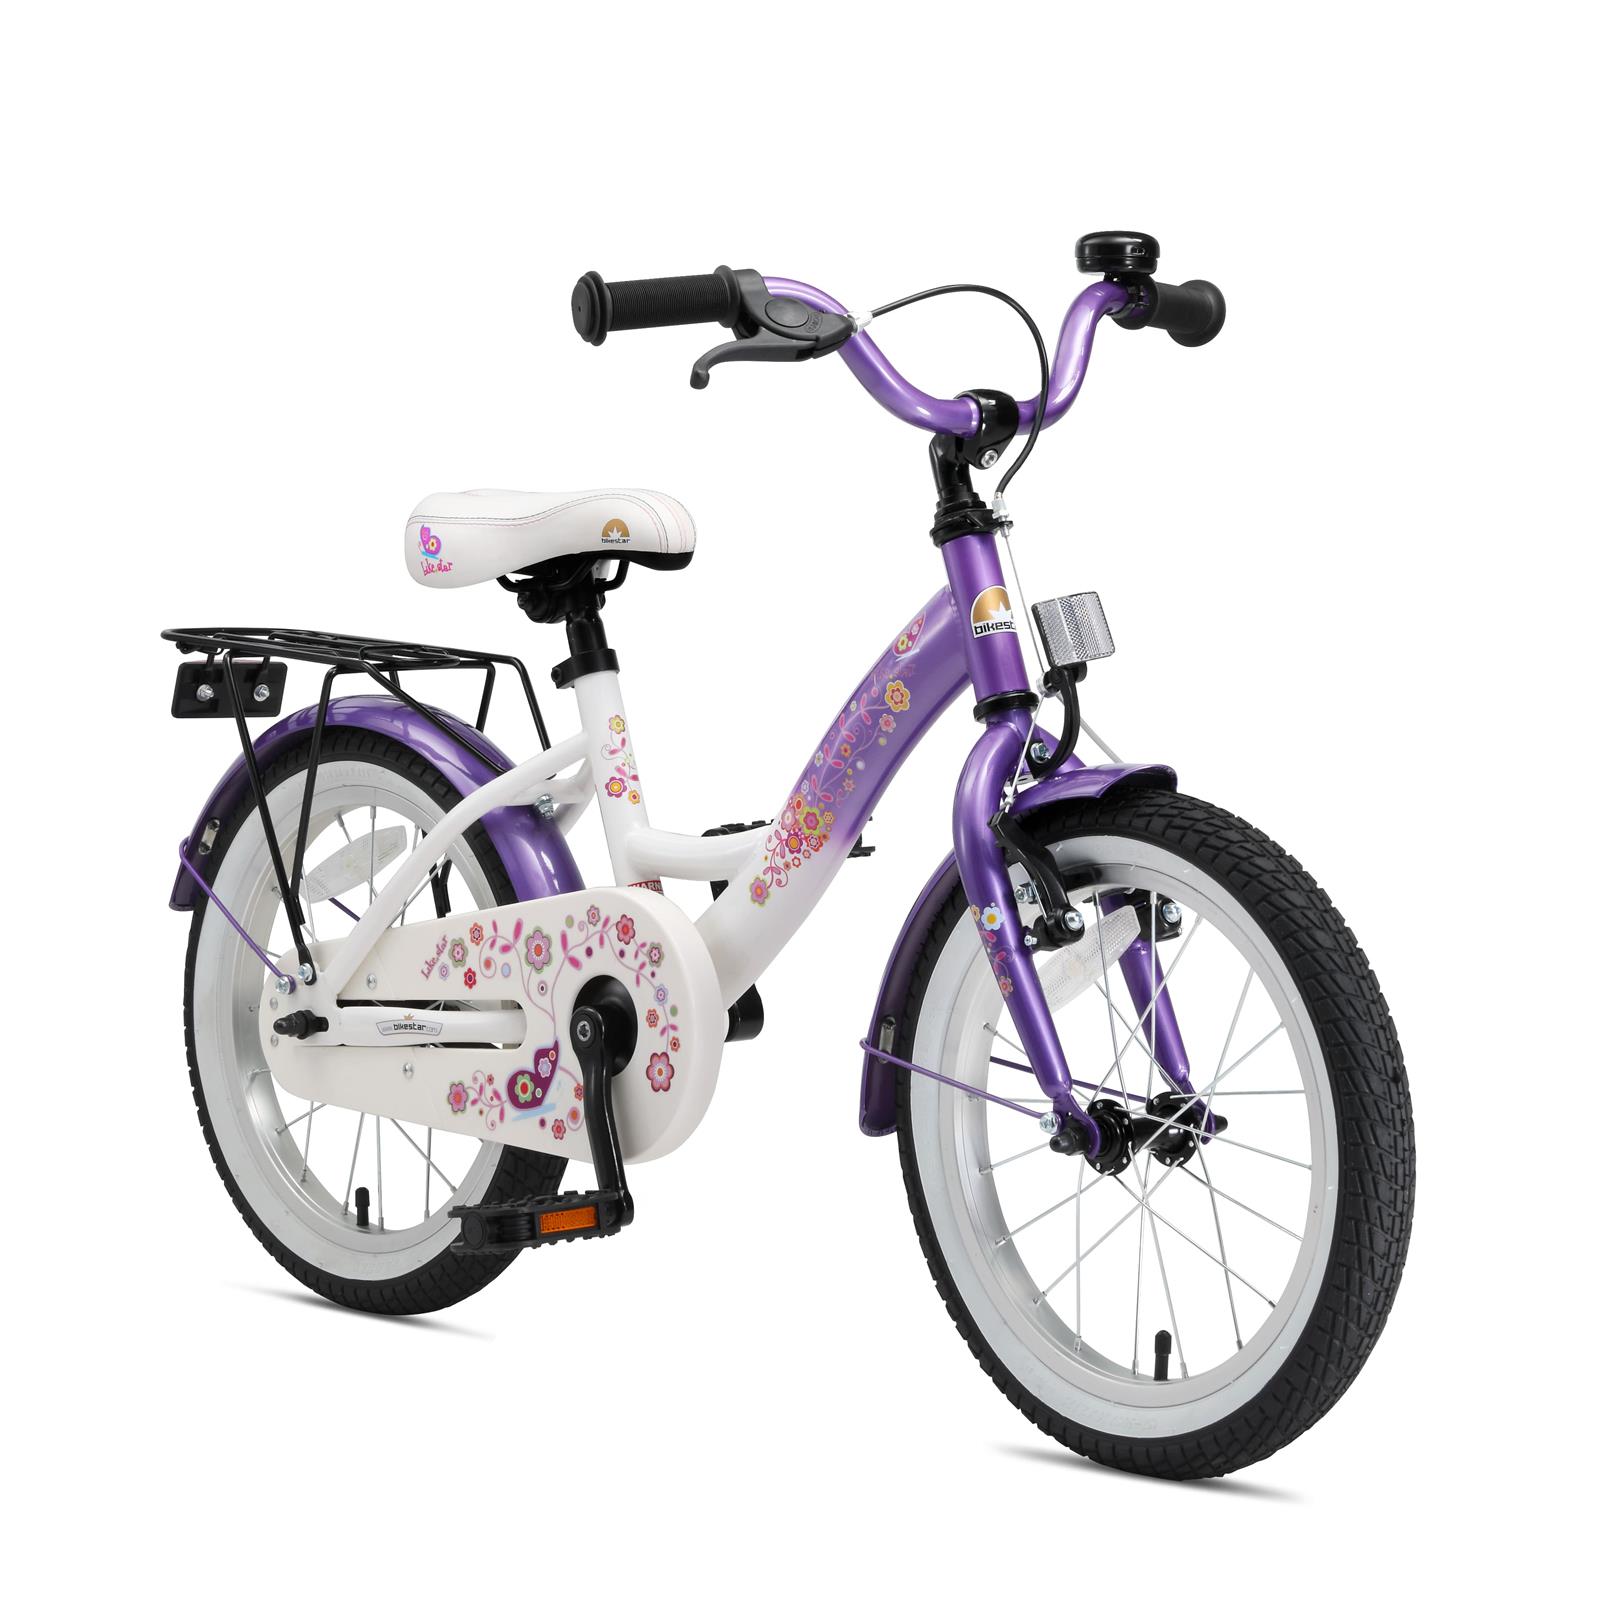 BIKESTAR Kinderfahrrad Kinderrad Fahrrad für Kinder ab 4 Jahre16 Zoll Classic 